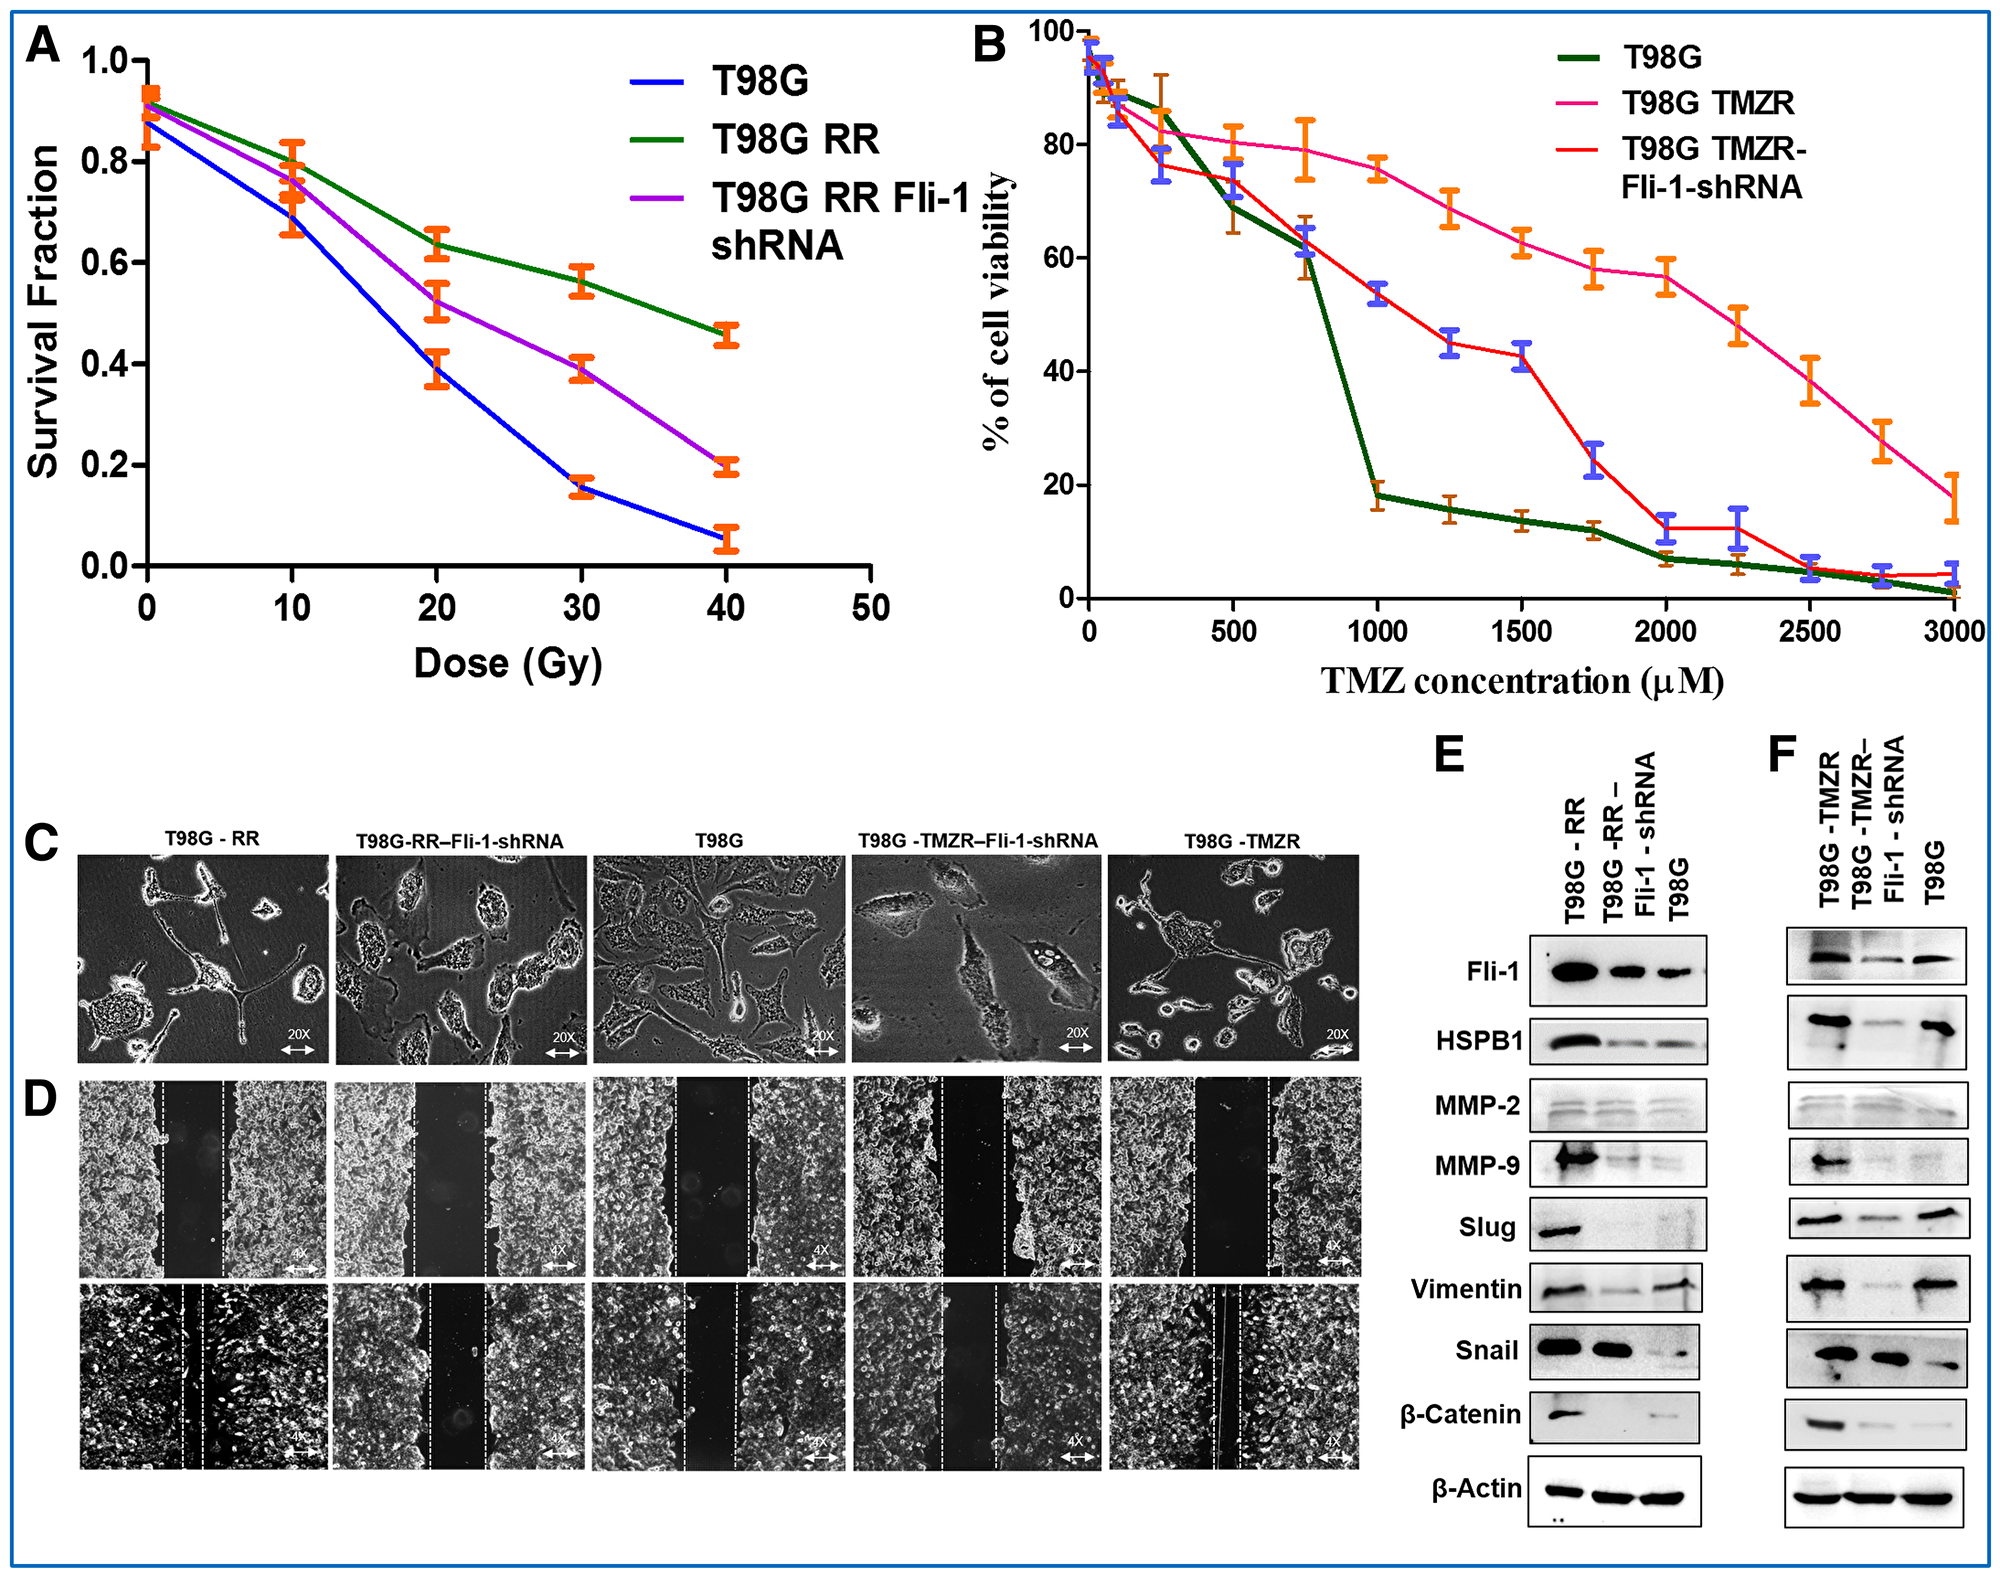 Therapeutic resistance is reversed in Fli-1 knockdown stable T98G RR Fli-1 shRNA and T98G TMZR Fli-1 shRNA cells.